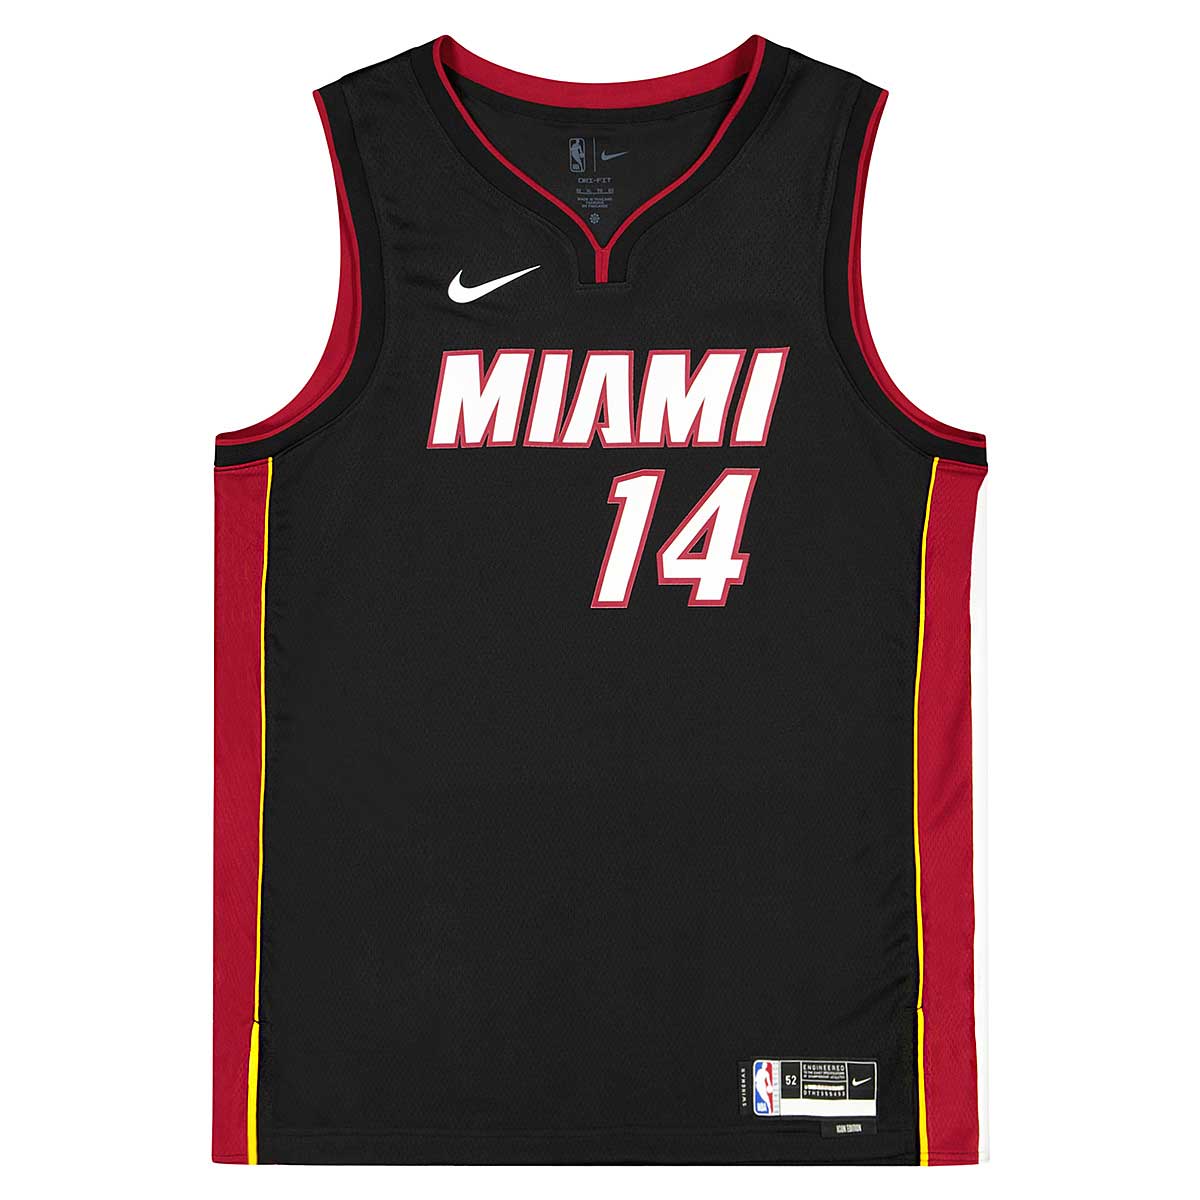 Miami Heat Nike Icon Swingman Jersey - Tyler Herro - Youth